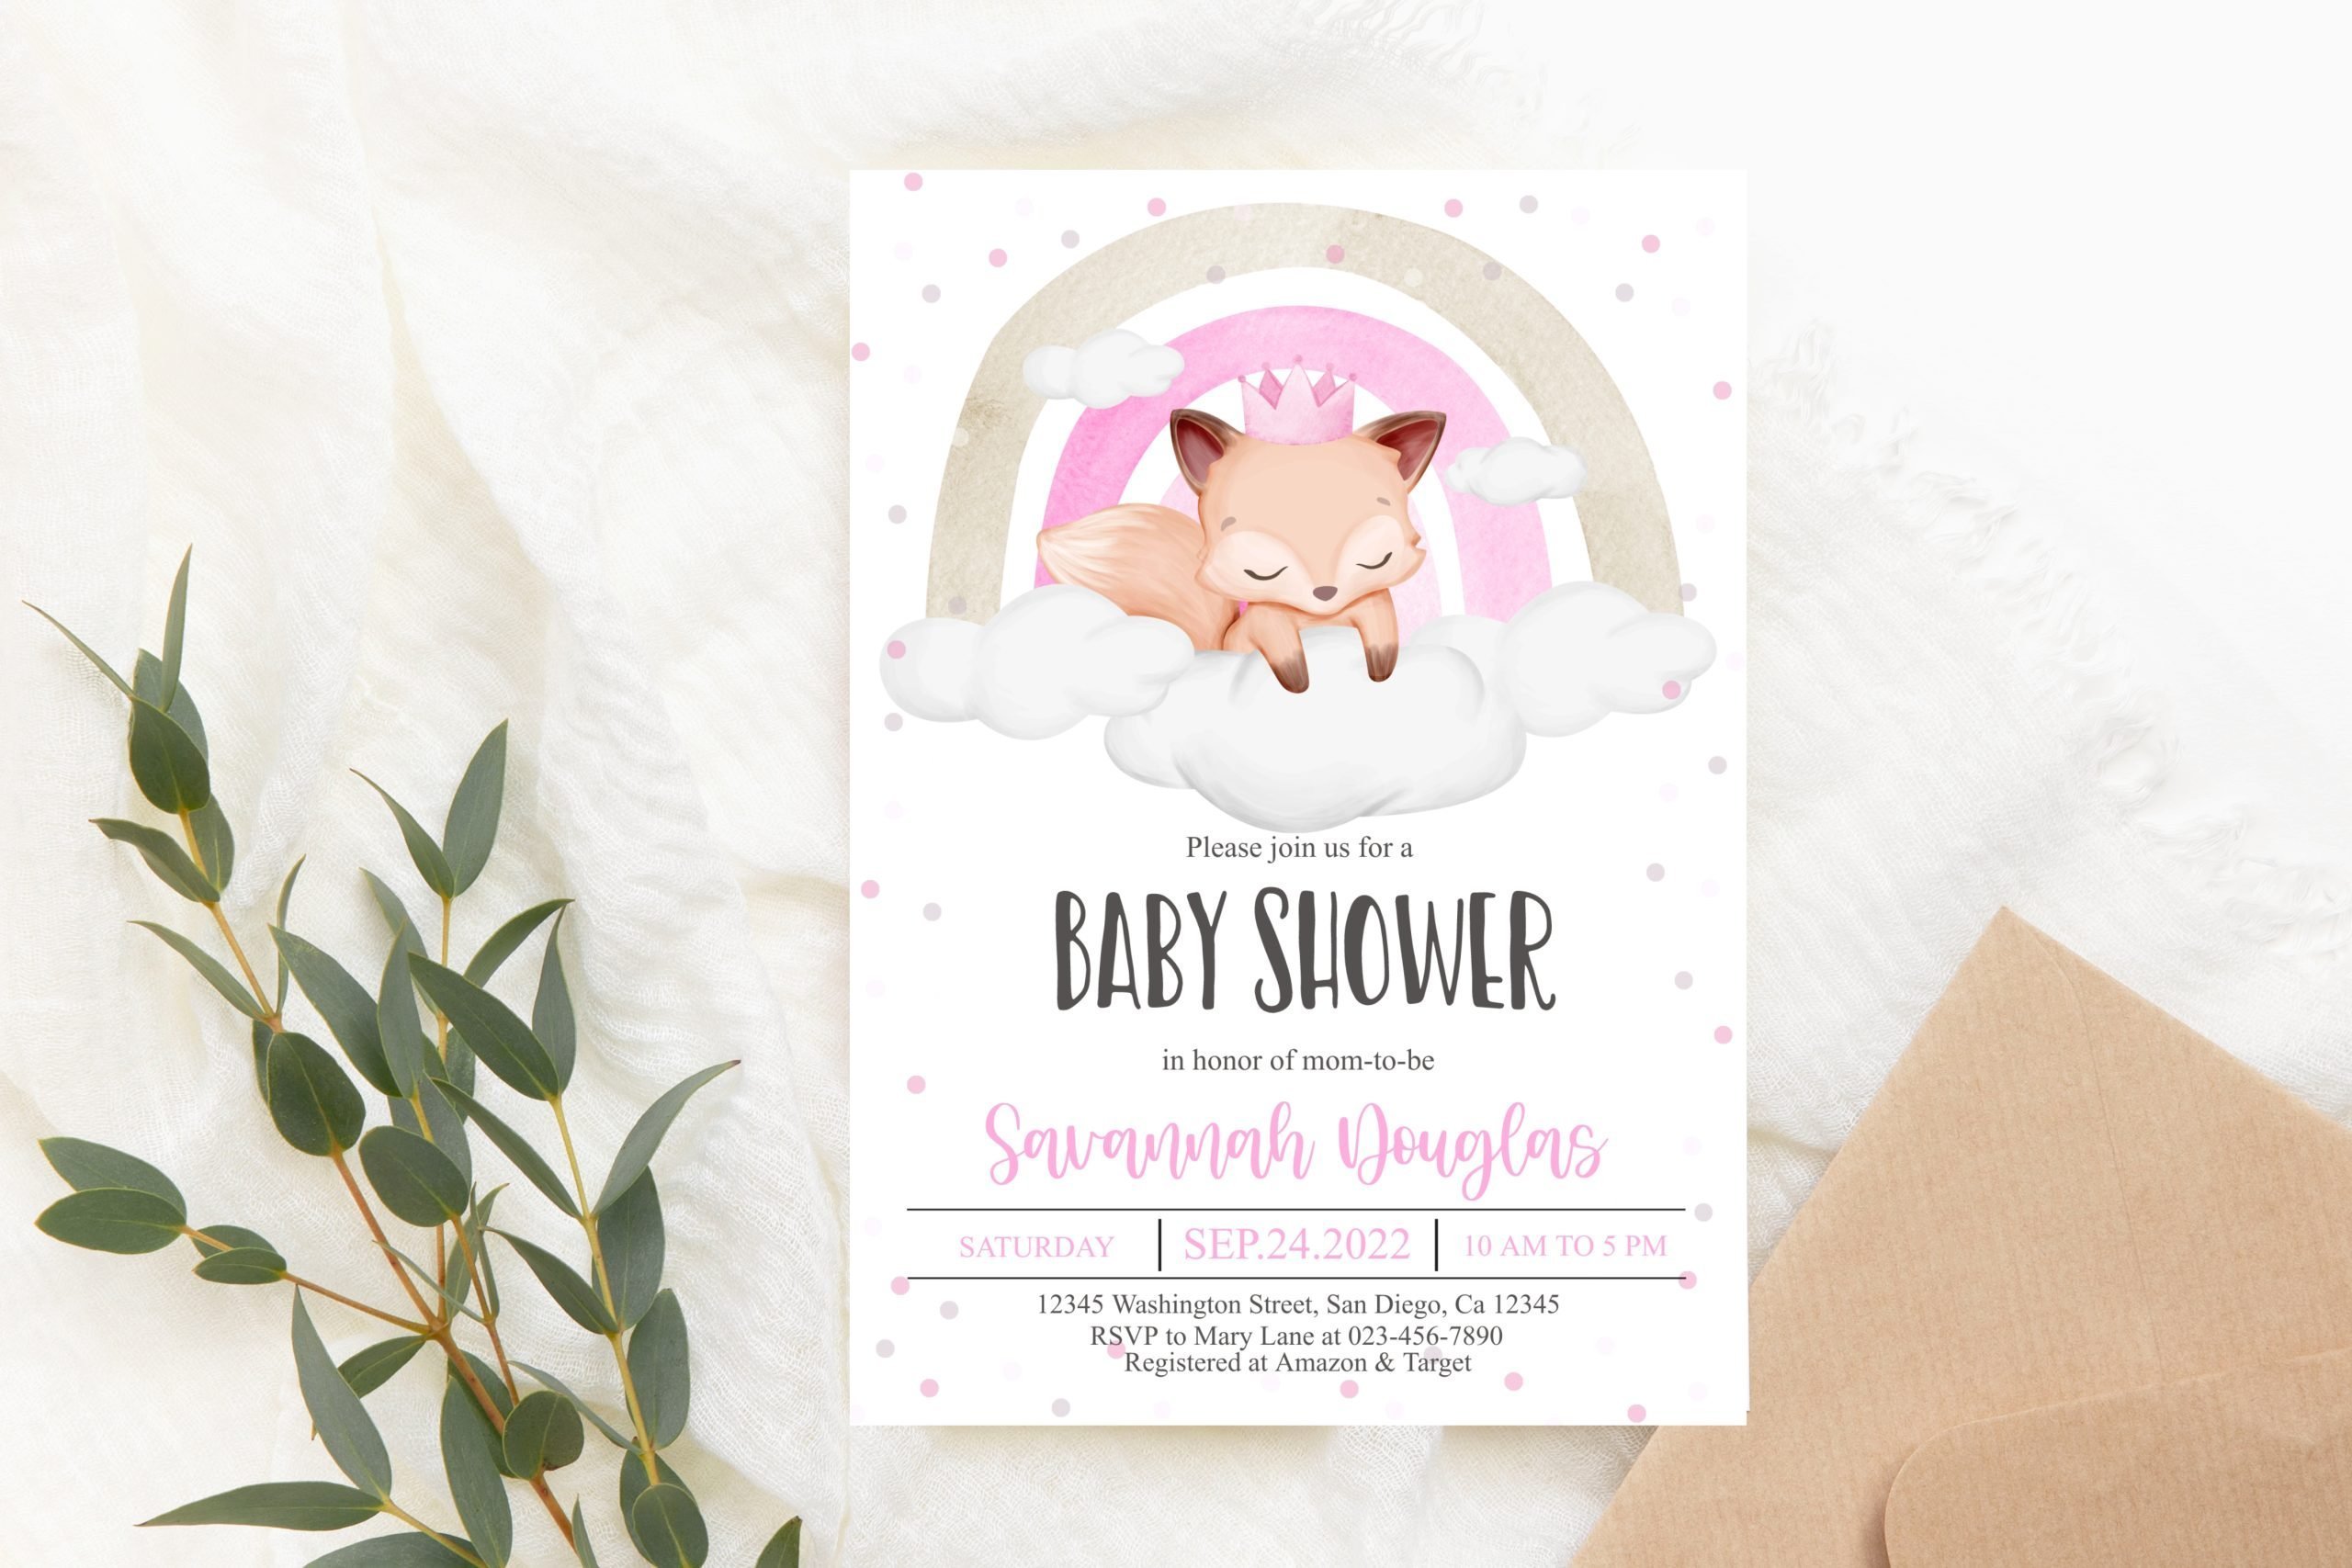 BABY SHOWER Editable Fox Baby Shower Invitation – Sleeping Fox Girl Baby Shower Invite 5x7 Baby Shower Invitation